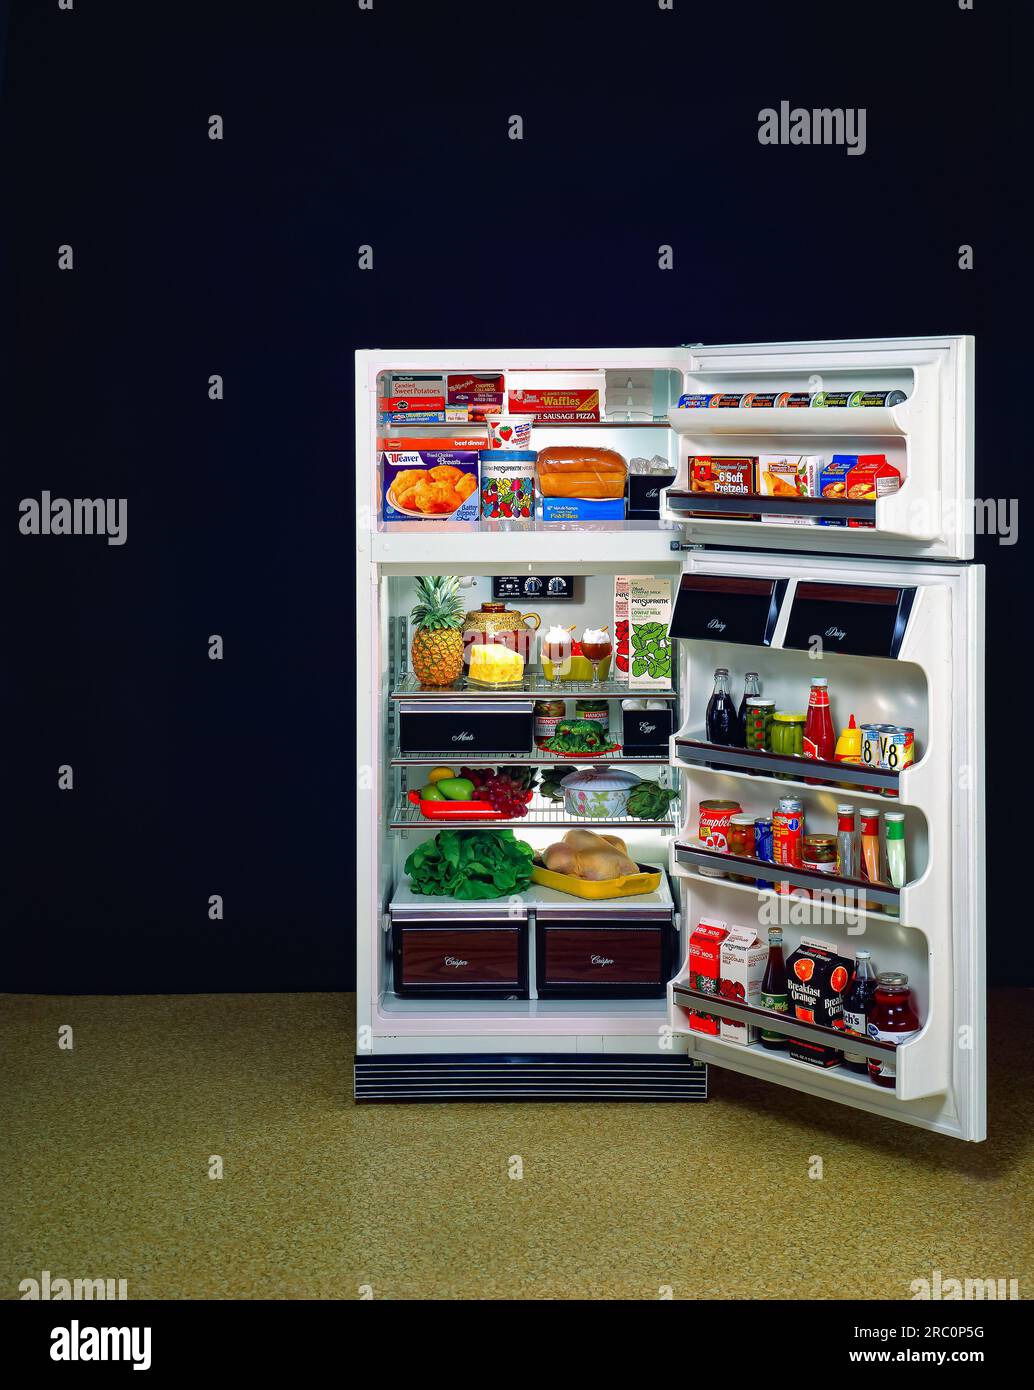 1960s philco refrigerator